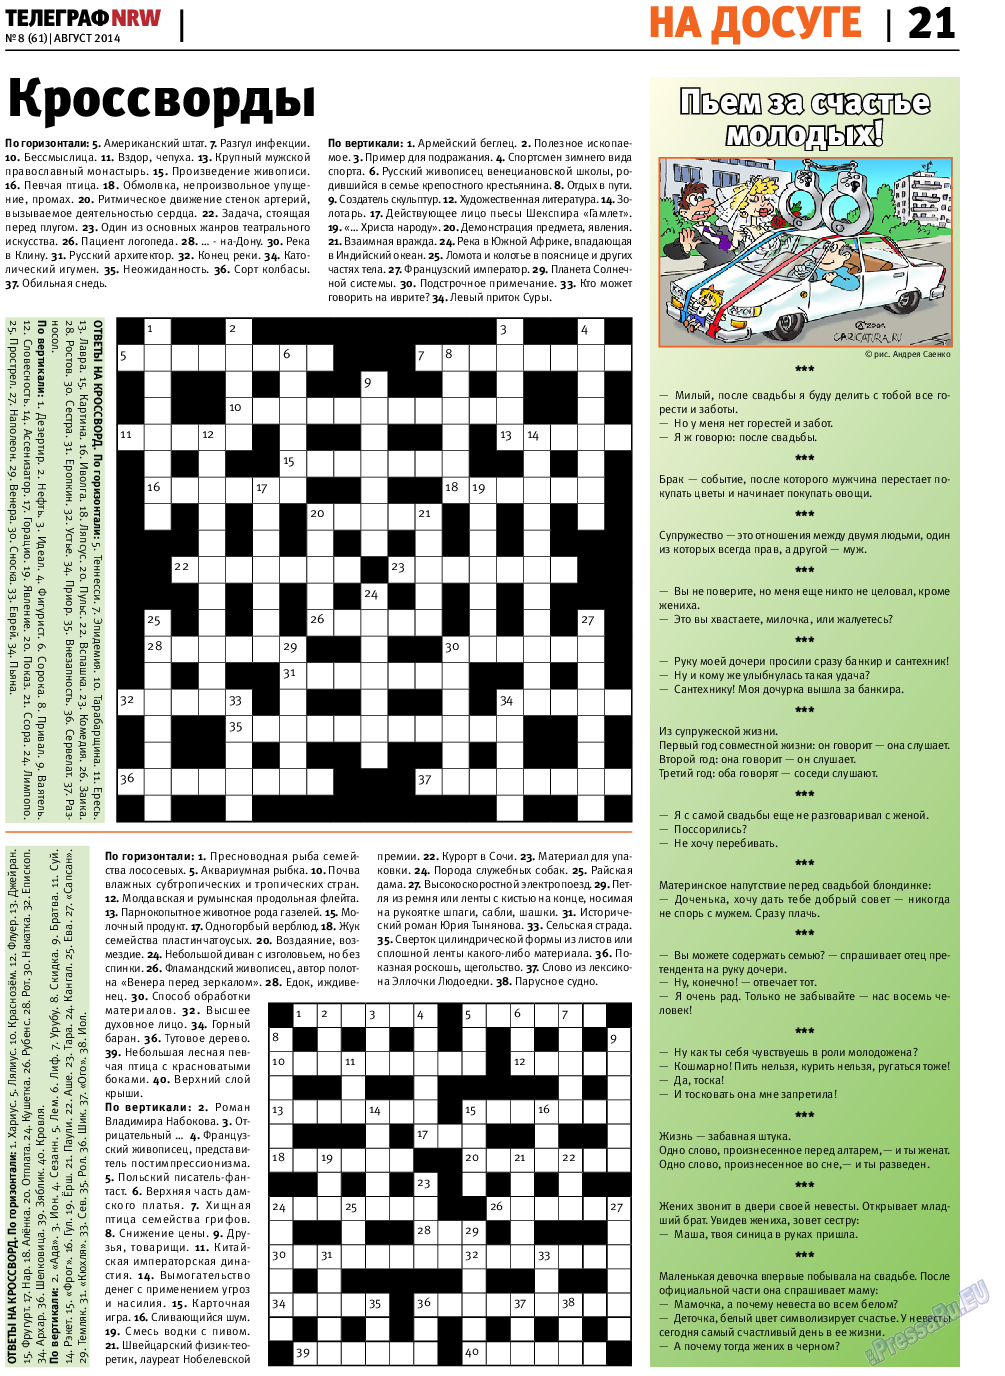 Телеграф NRW, газета. 2014 №8 стр.21